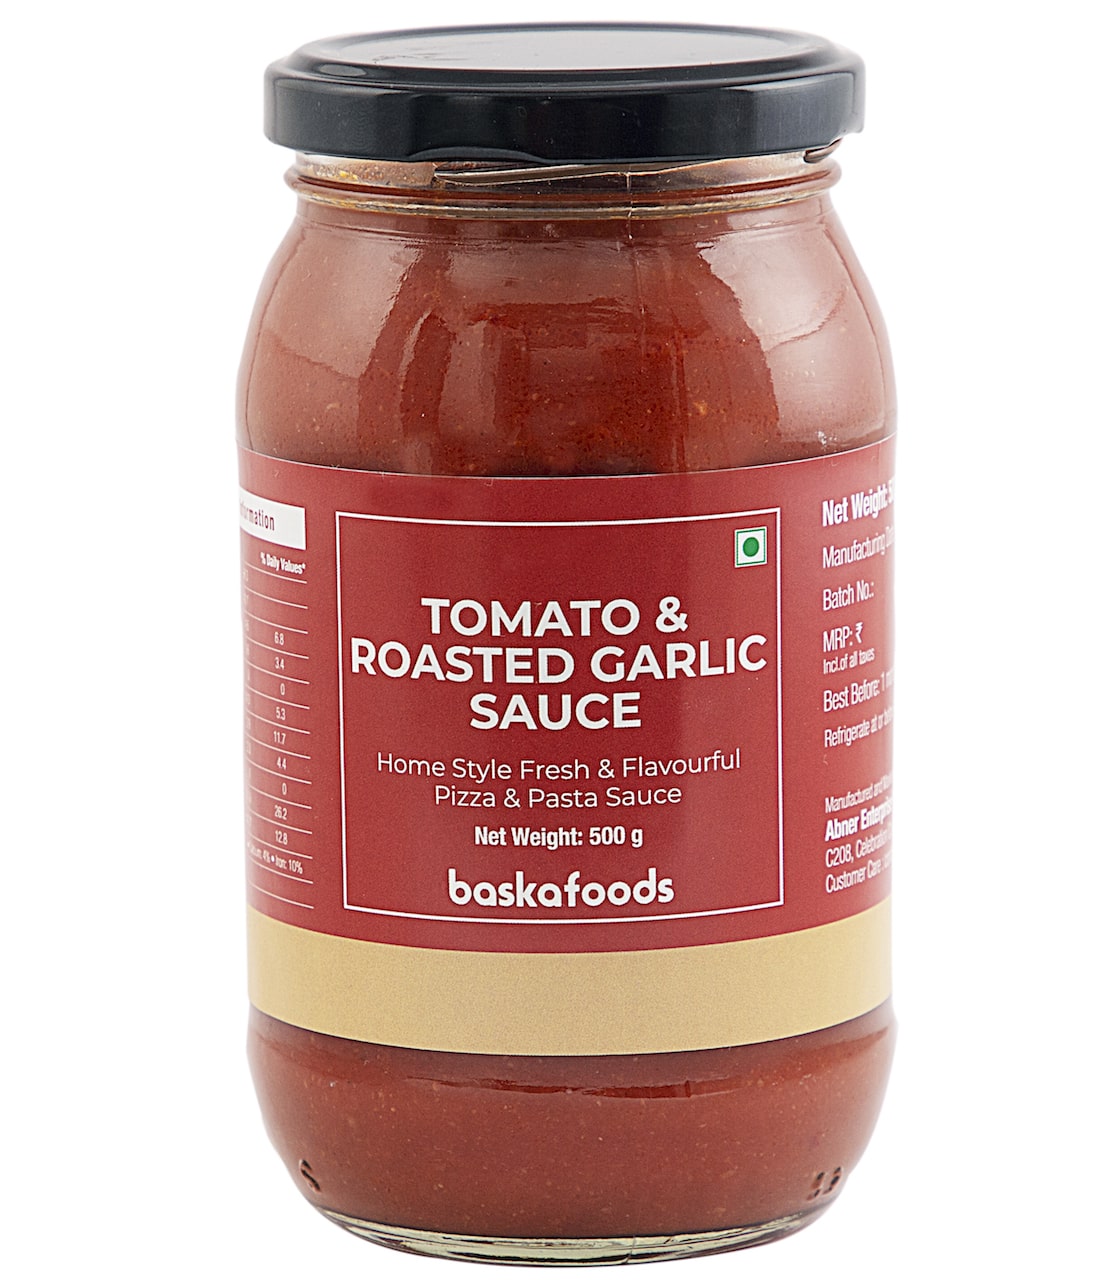 Tomato & Roasted Garlic Sauce